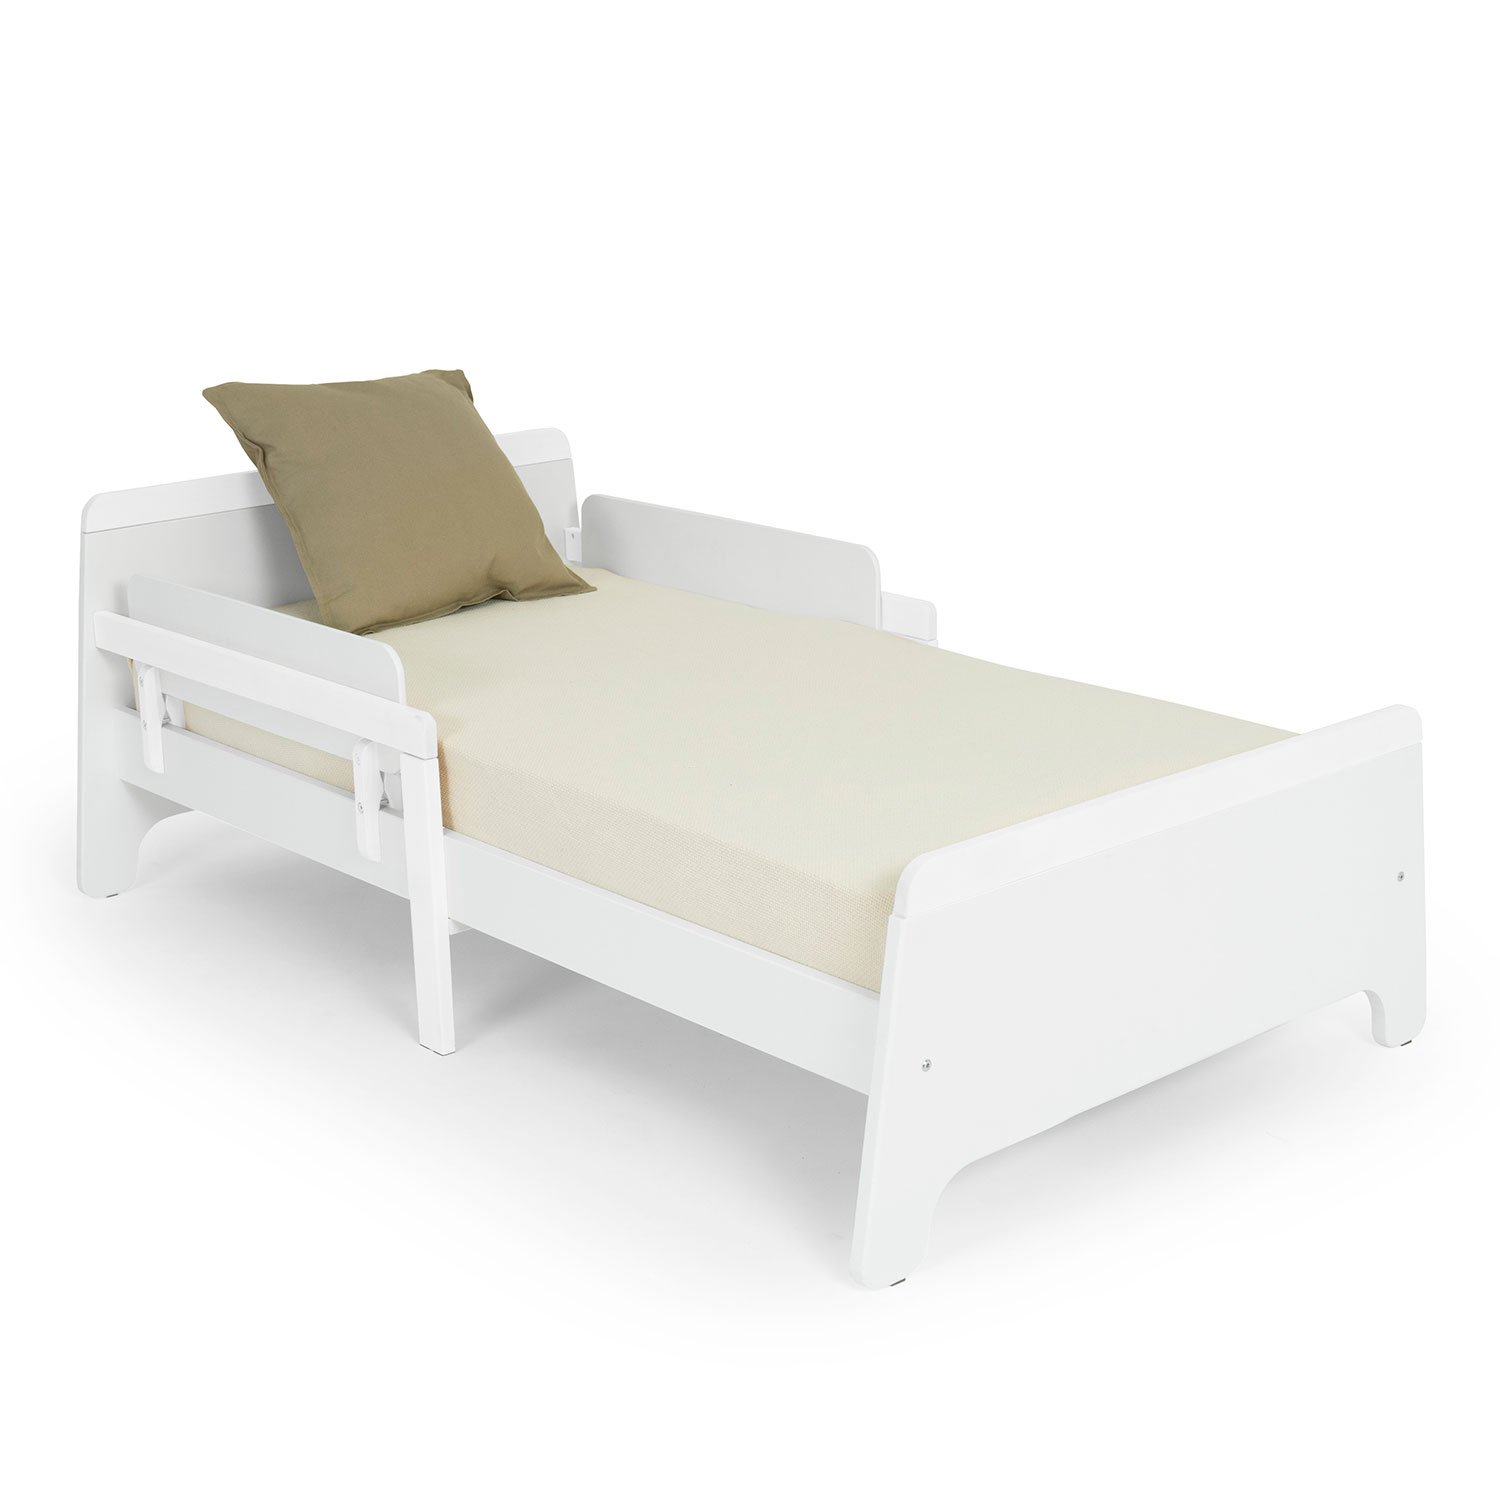 Подростковая кровать Nuovita Stanzione Nave lungo (Белый, Снежная береза) кровать подростковая pituso bambino белый